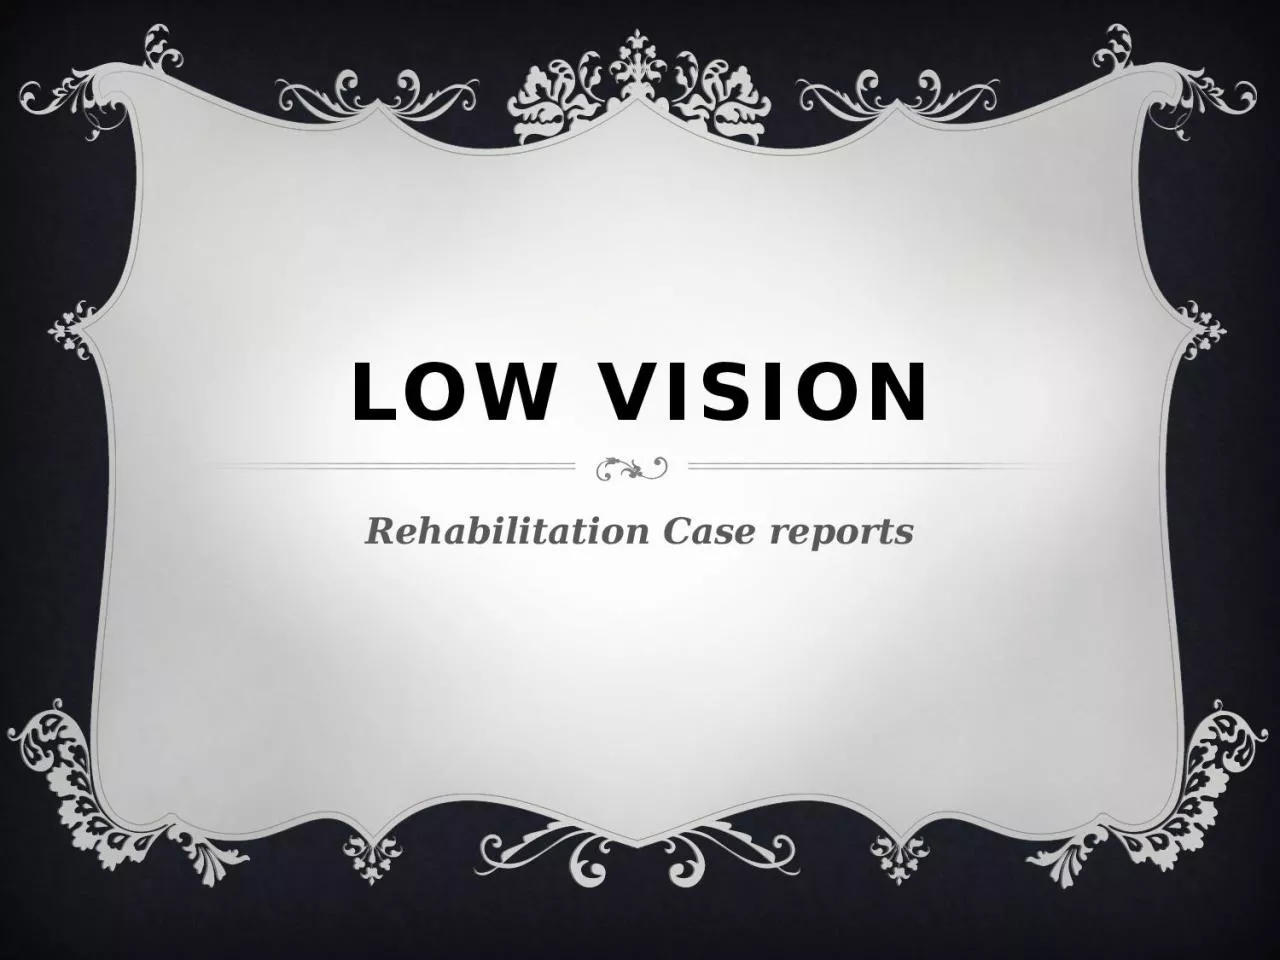 Low Vision Rehabilitation Case reports